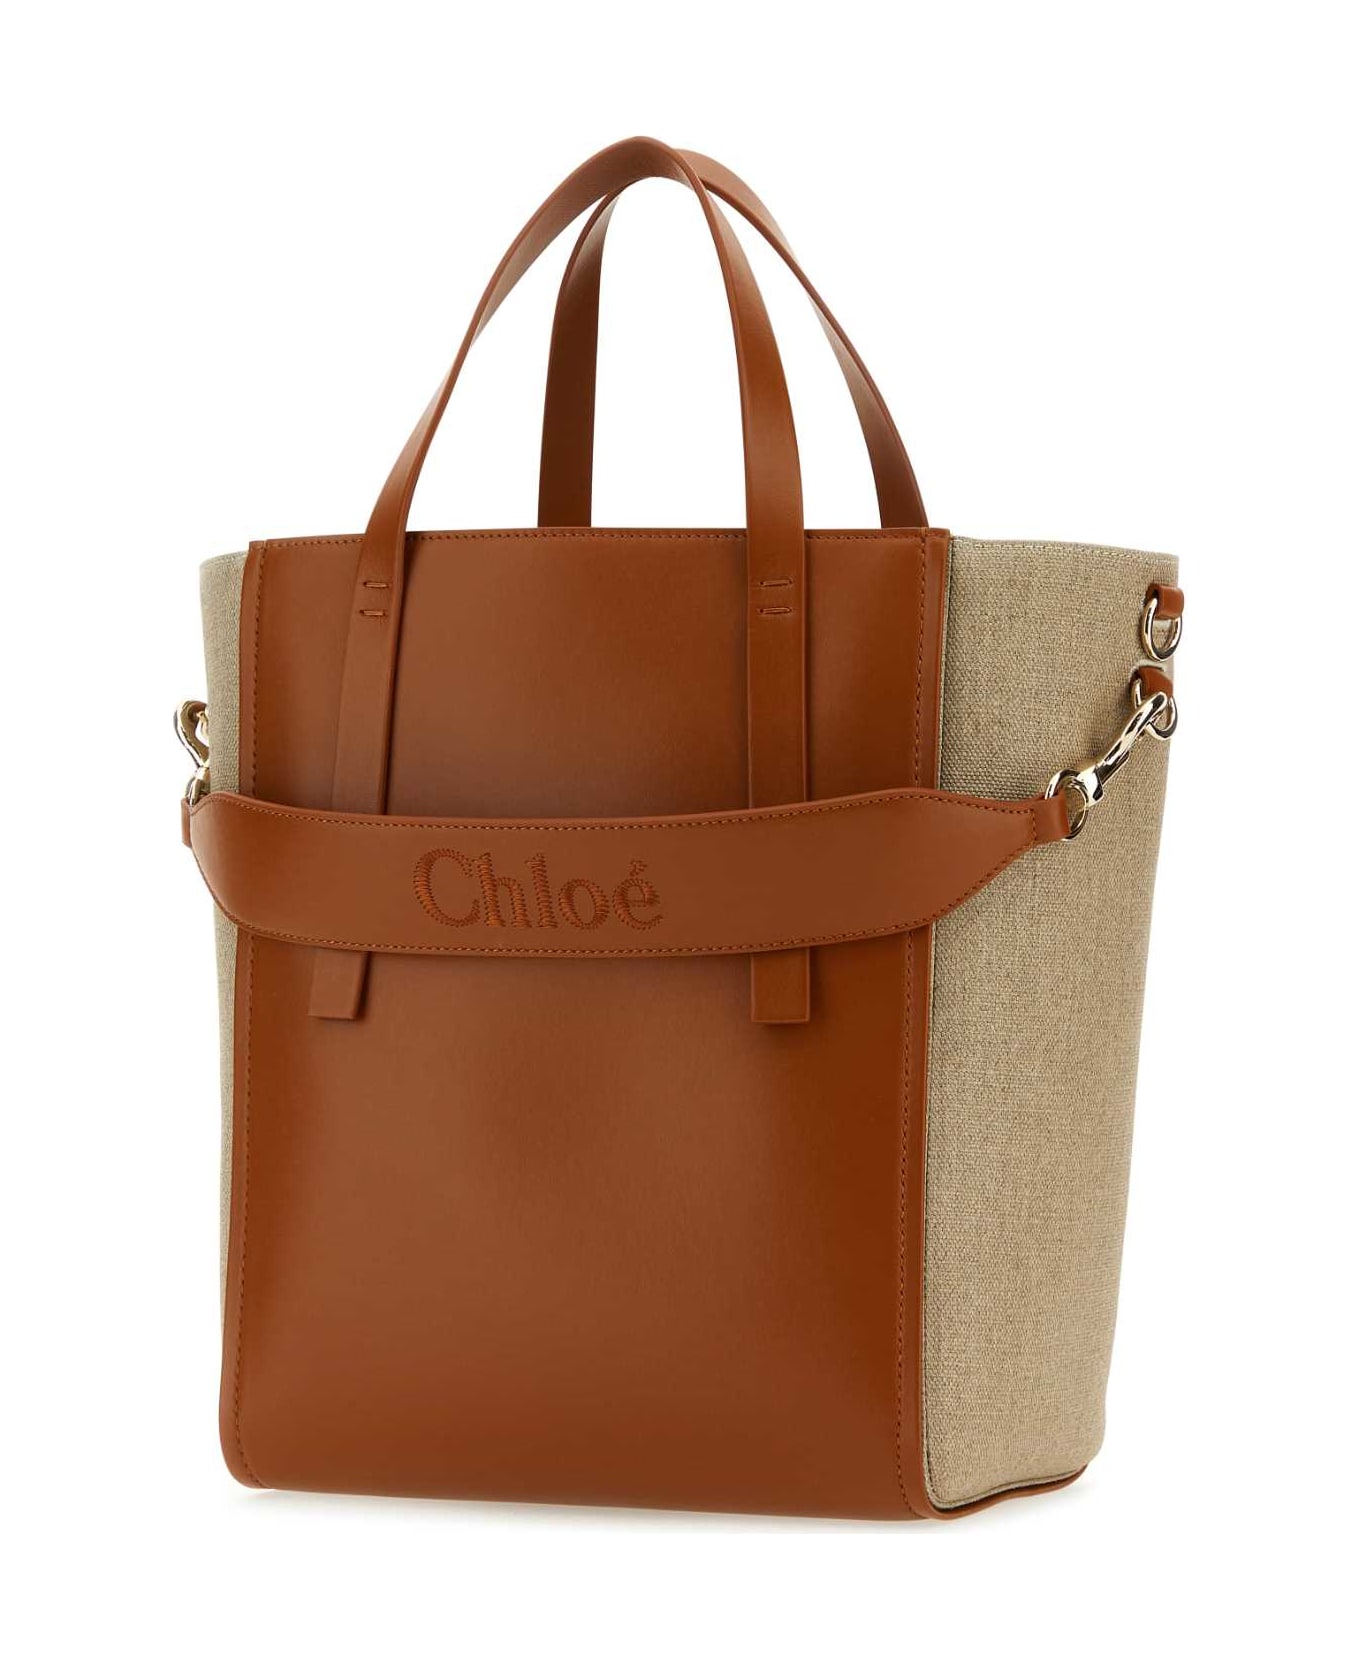 Chloé Two-tone Linen And Leather Medium Sense Shopping Bag - CARAMEL